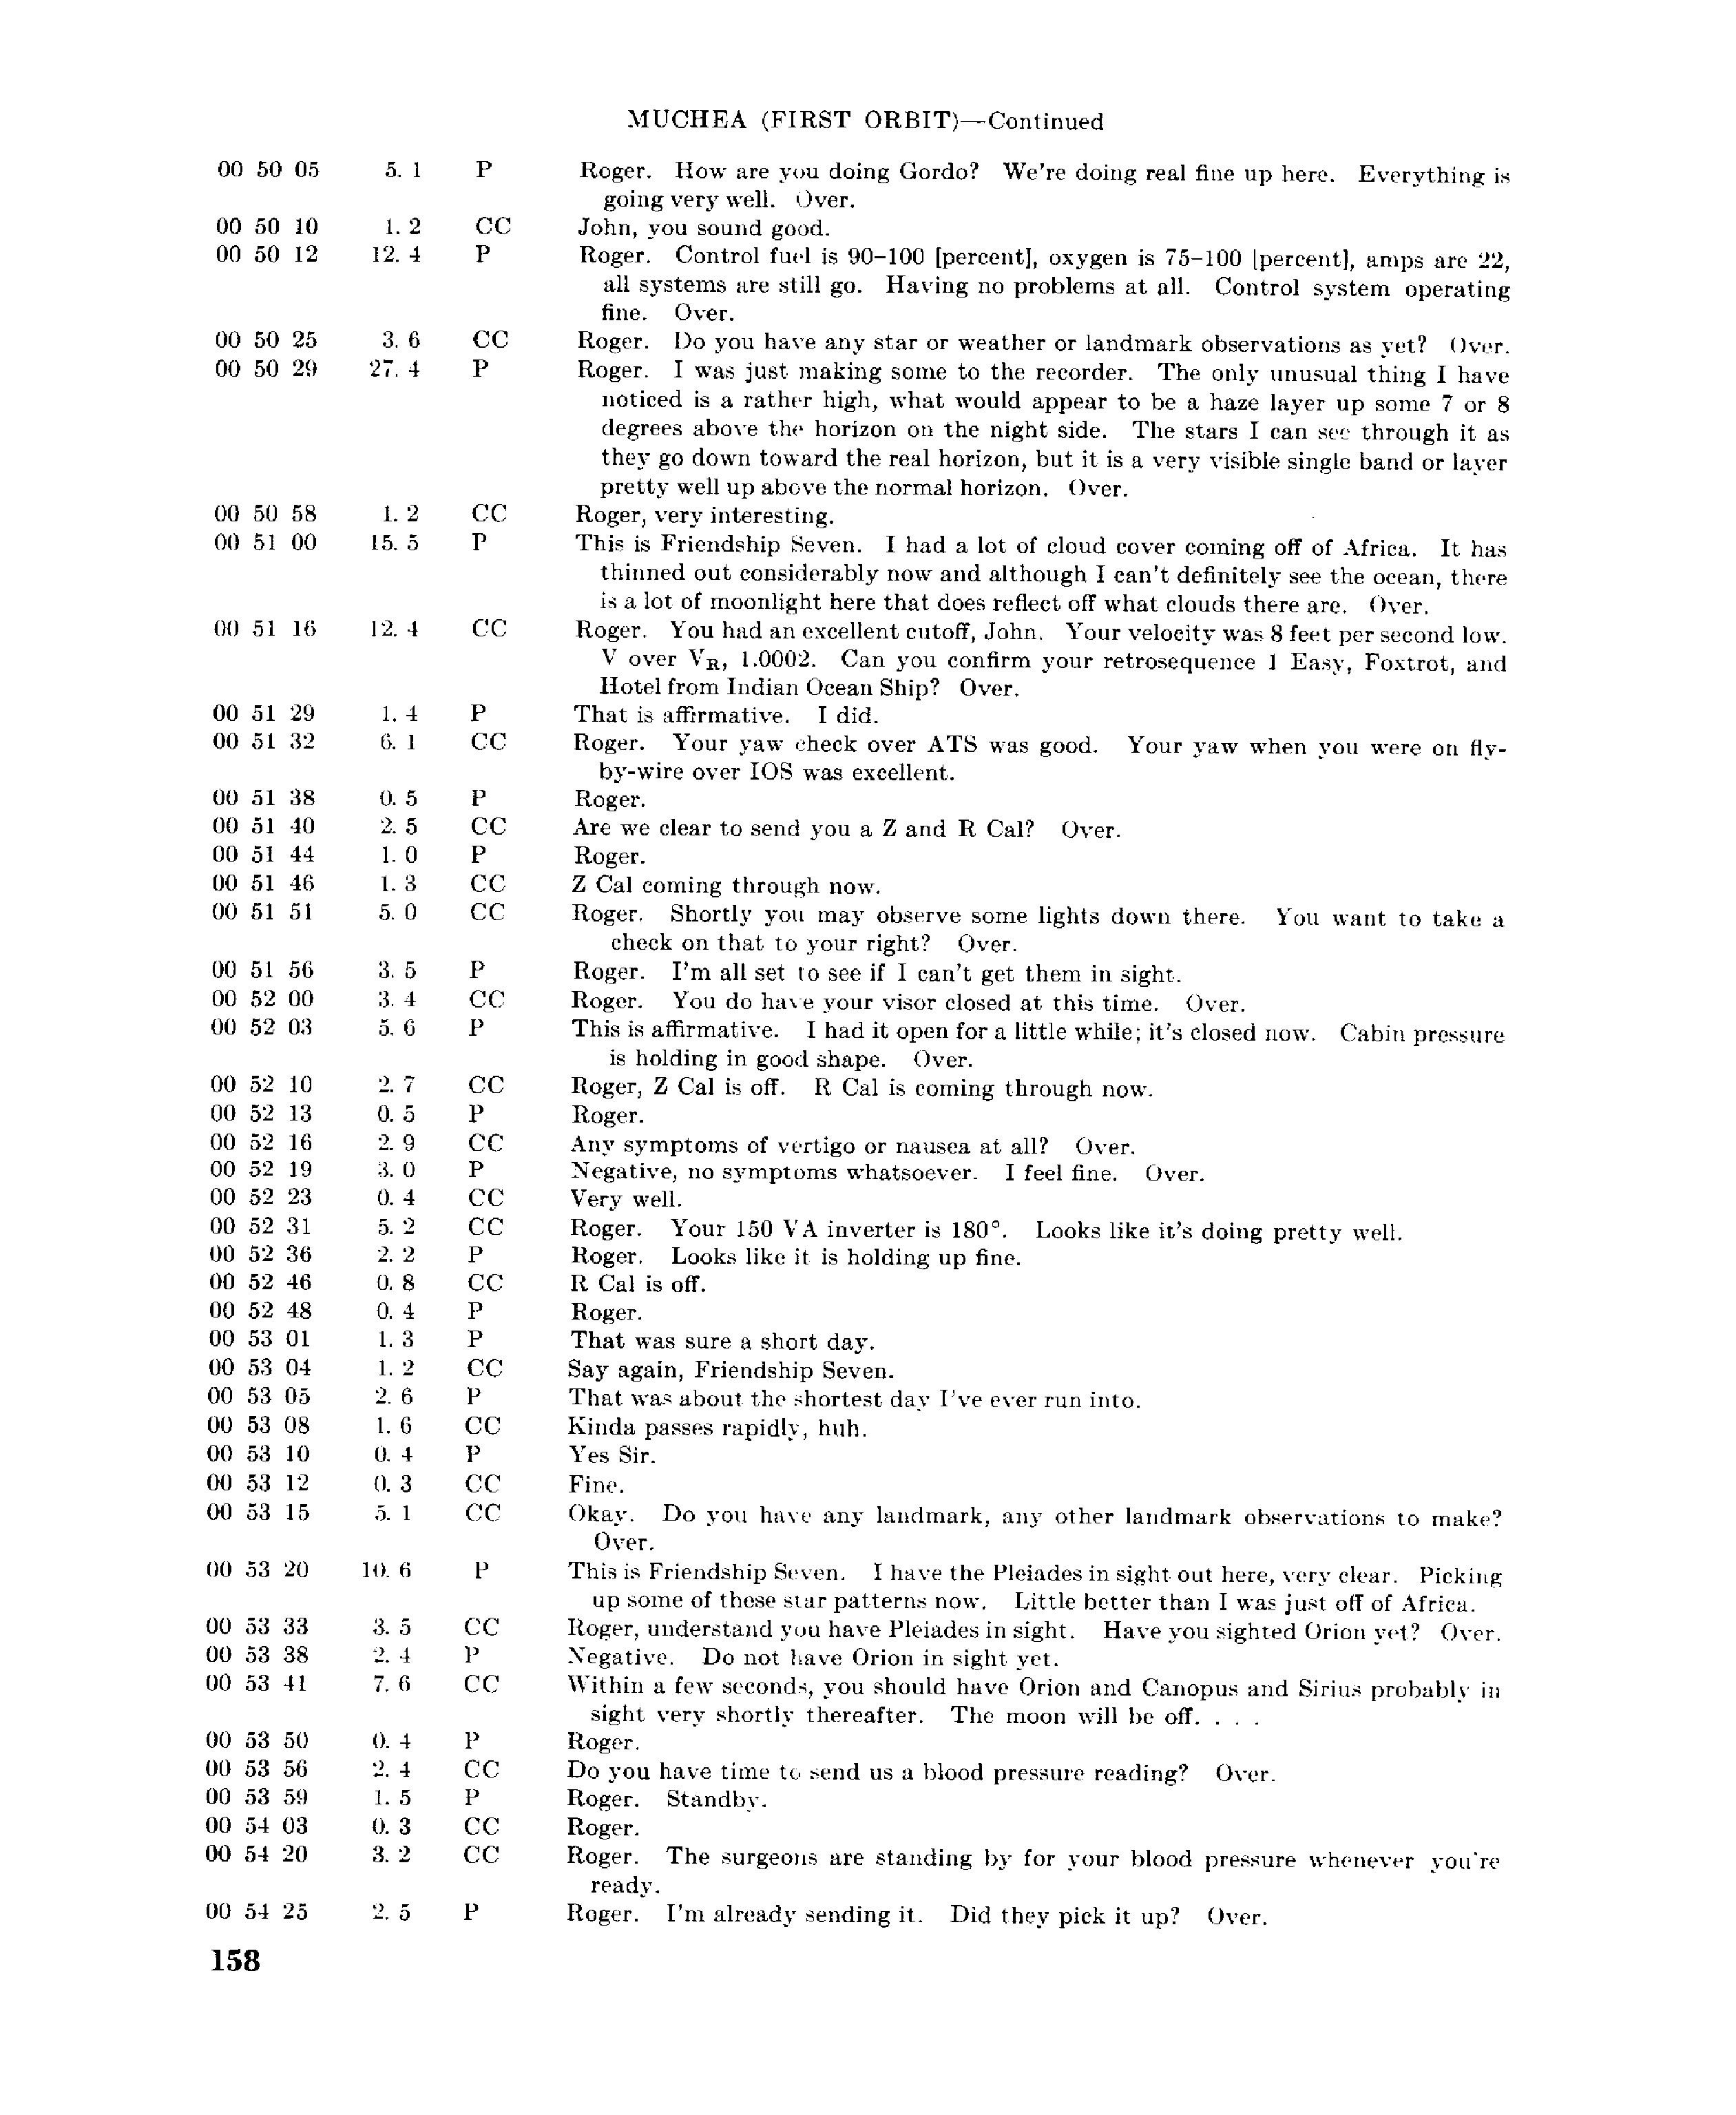 Page 157 of Mercury 6’s original transcript